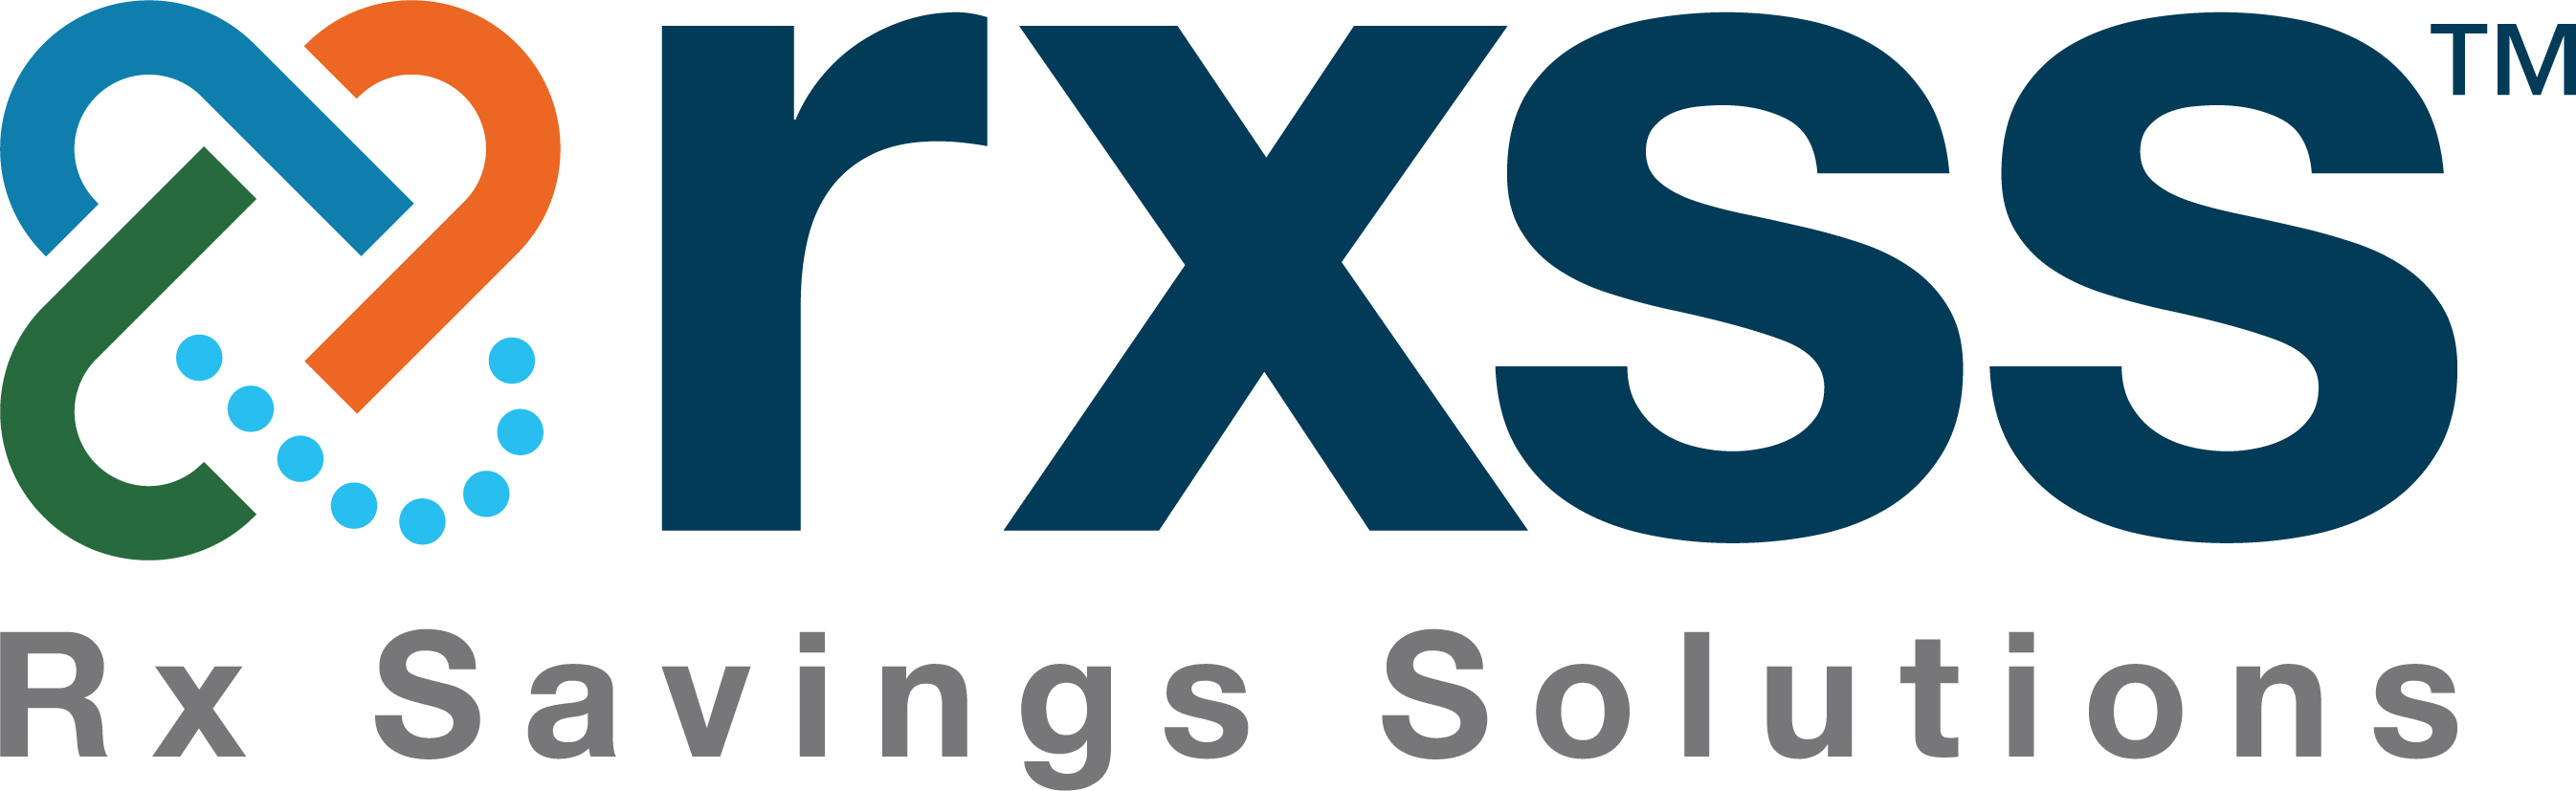 New RxSS Logo